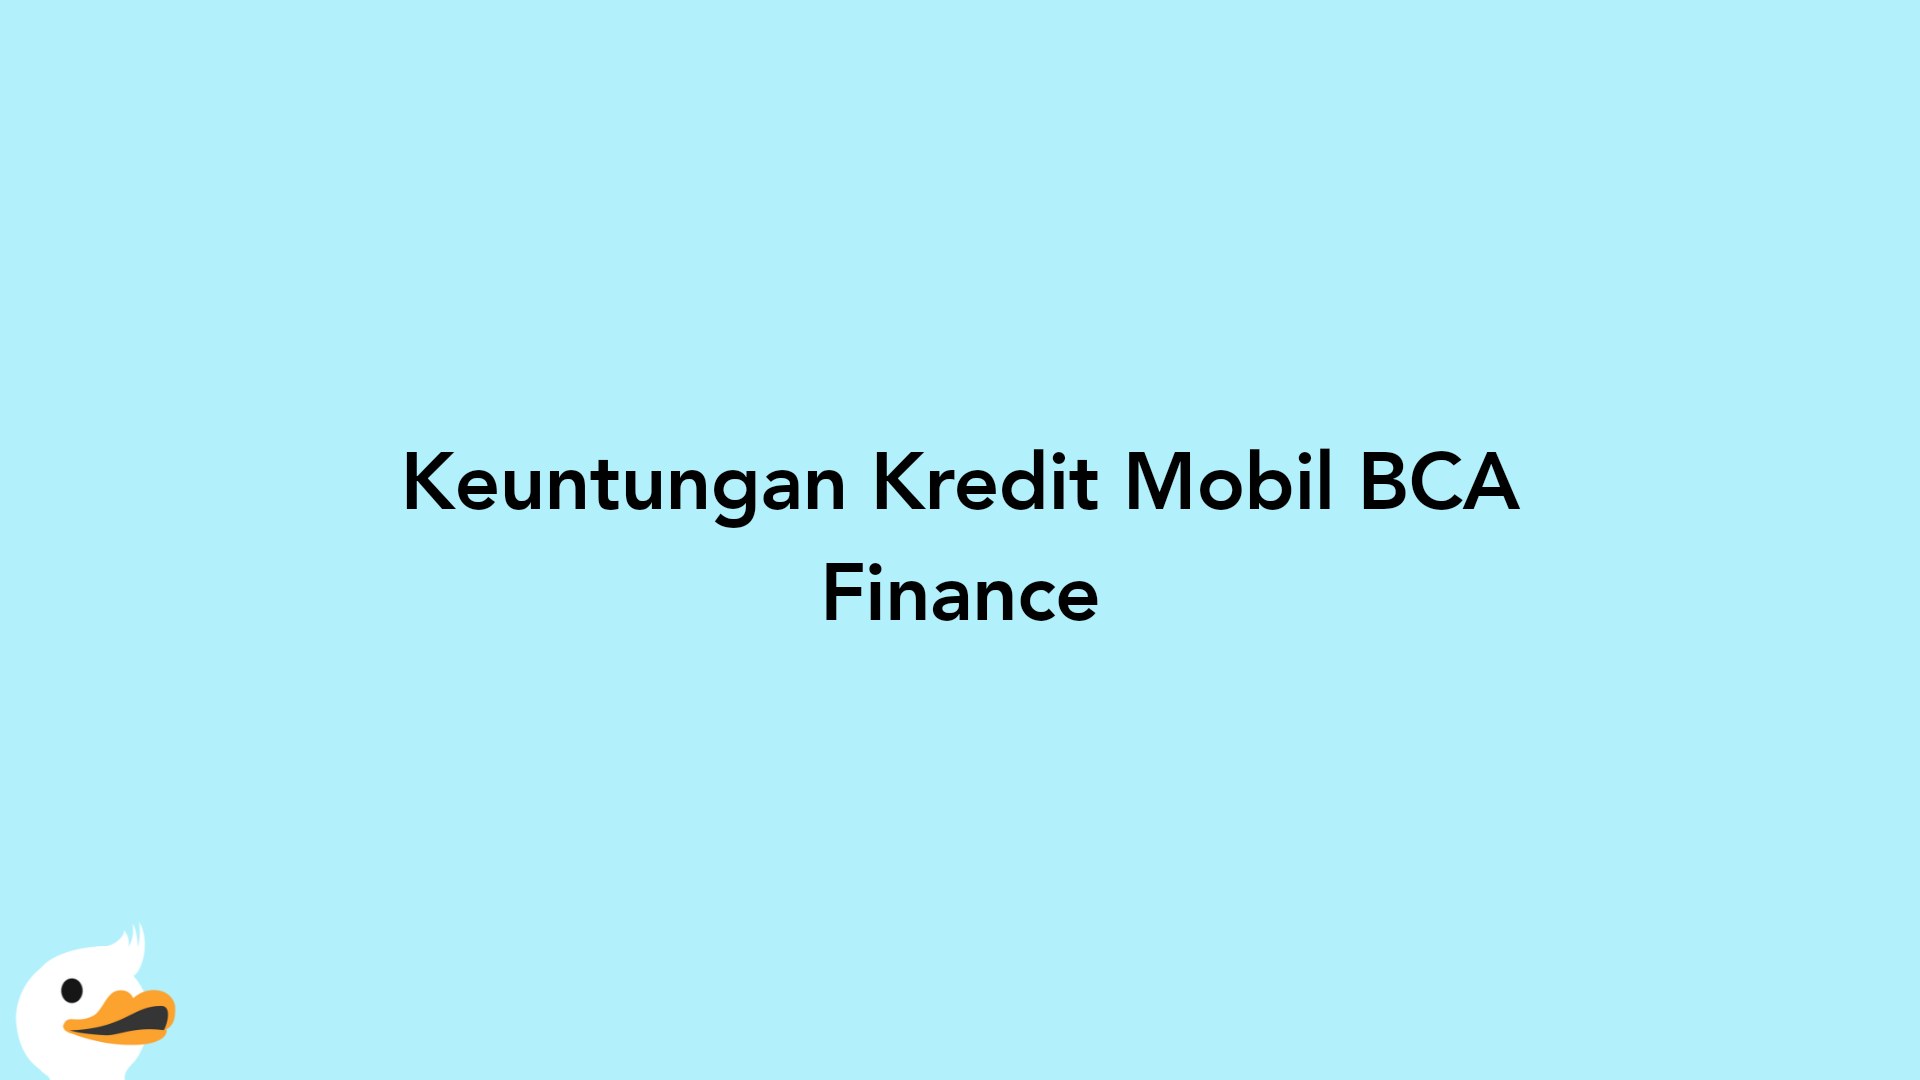 Keuntungan Kredit Mobil BCA Finance